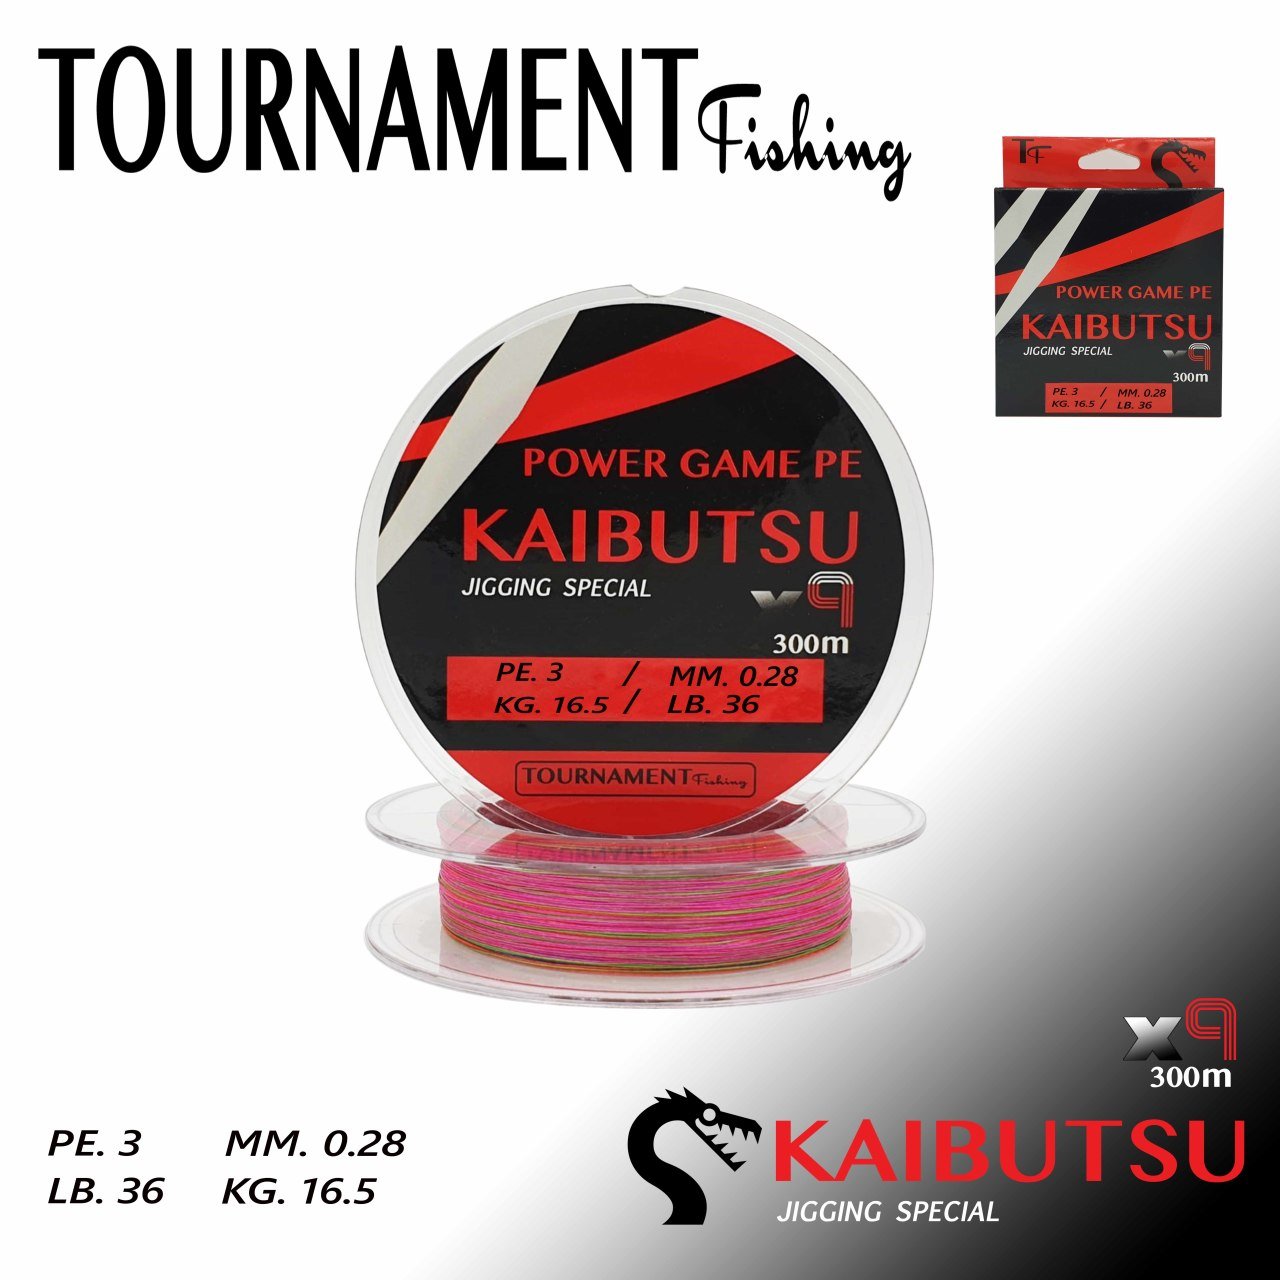 TOURNAMENT fishing Power game pe KAIBUTSU Jigging Special X9 PE. 3 /MM0.28 KG16.5/LB.36